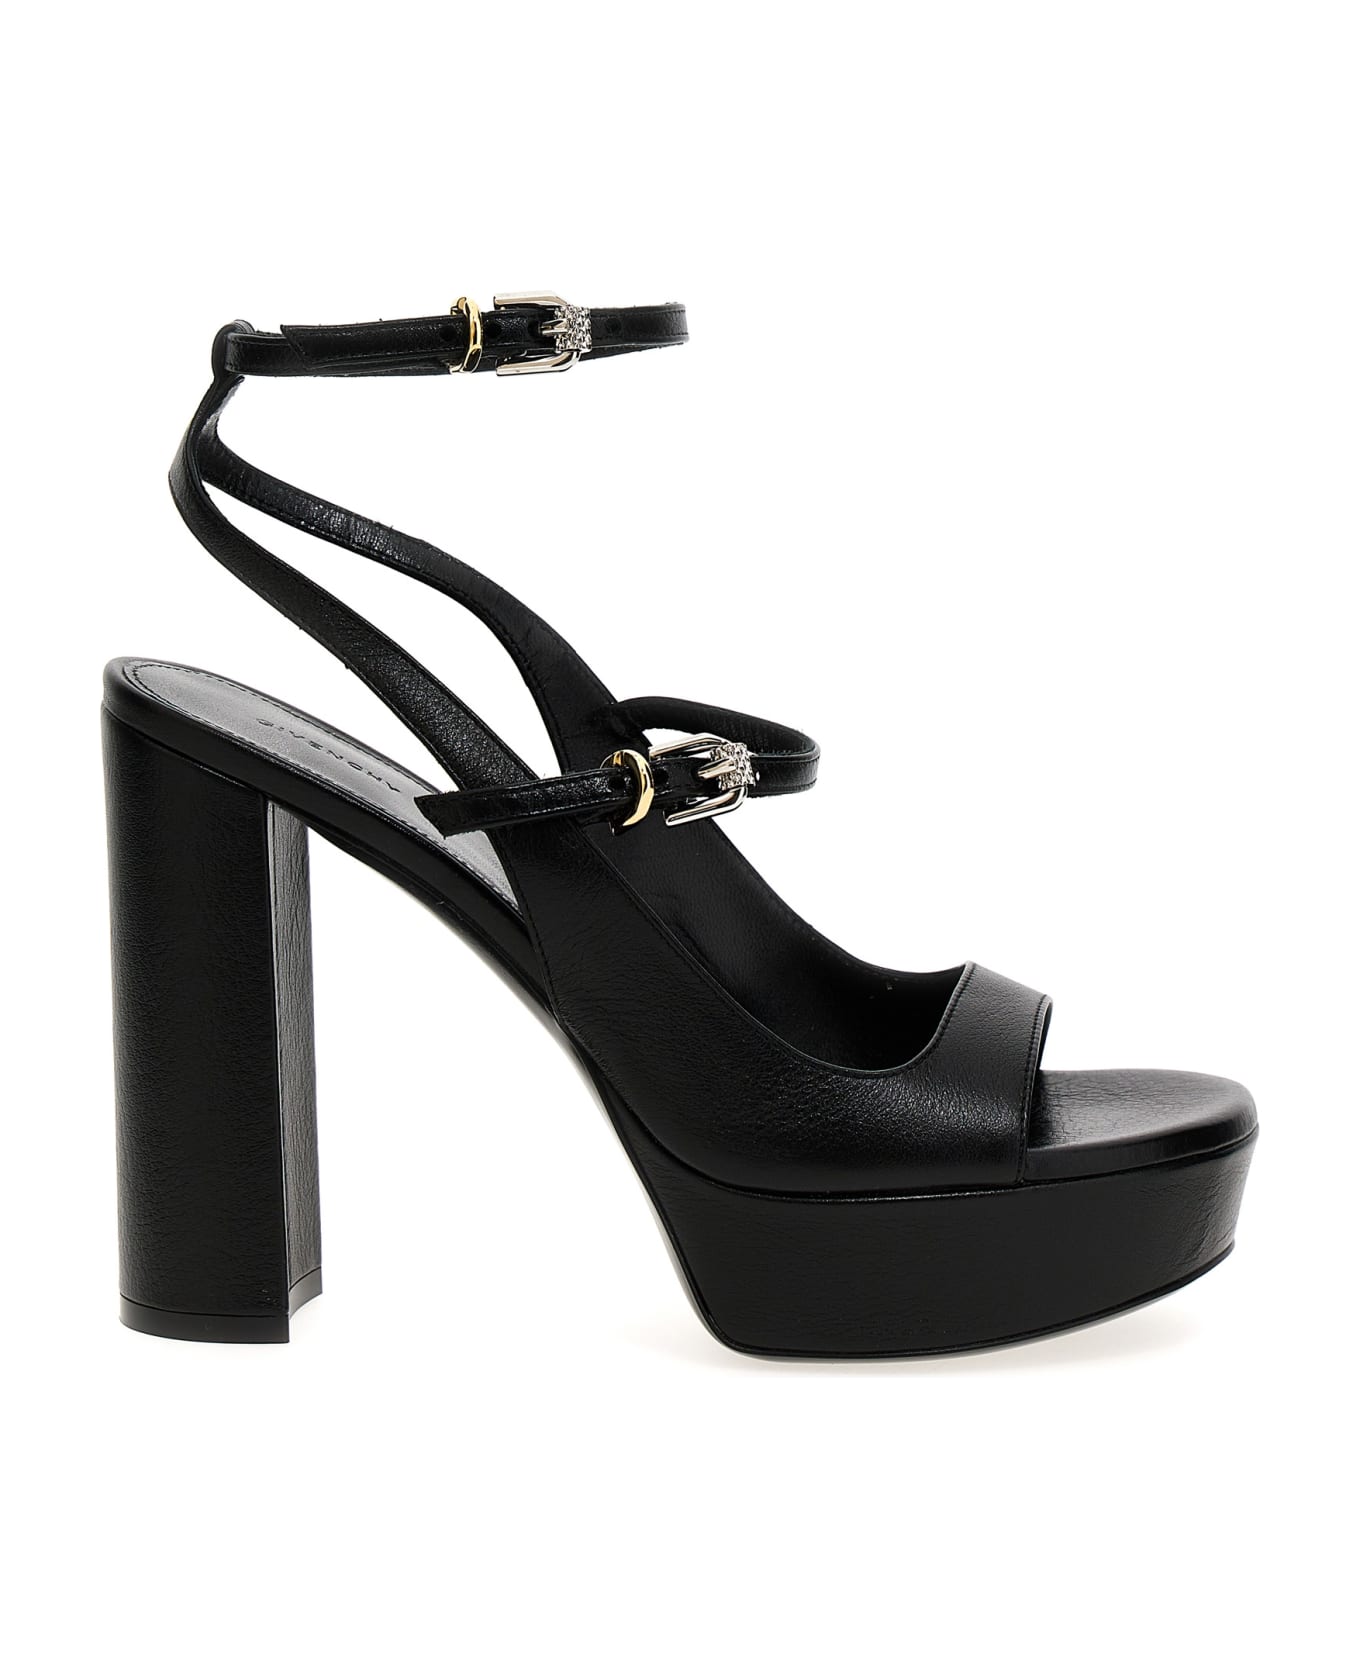 Givenchy Voyou Sandals - Black サンダル